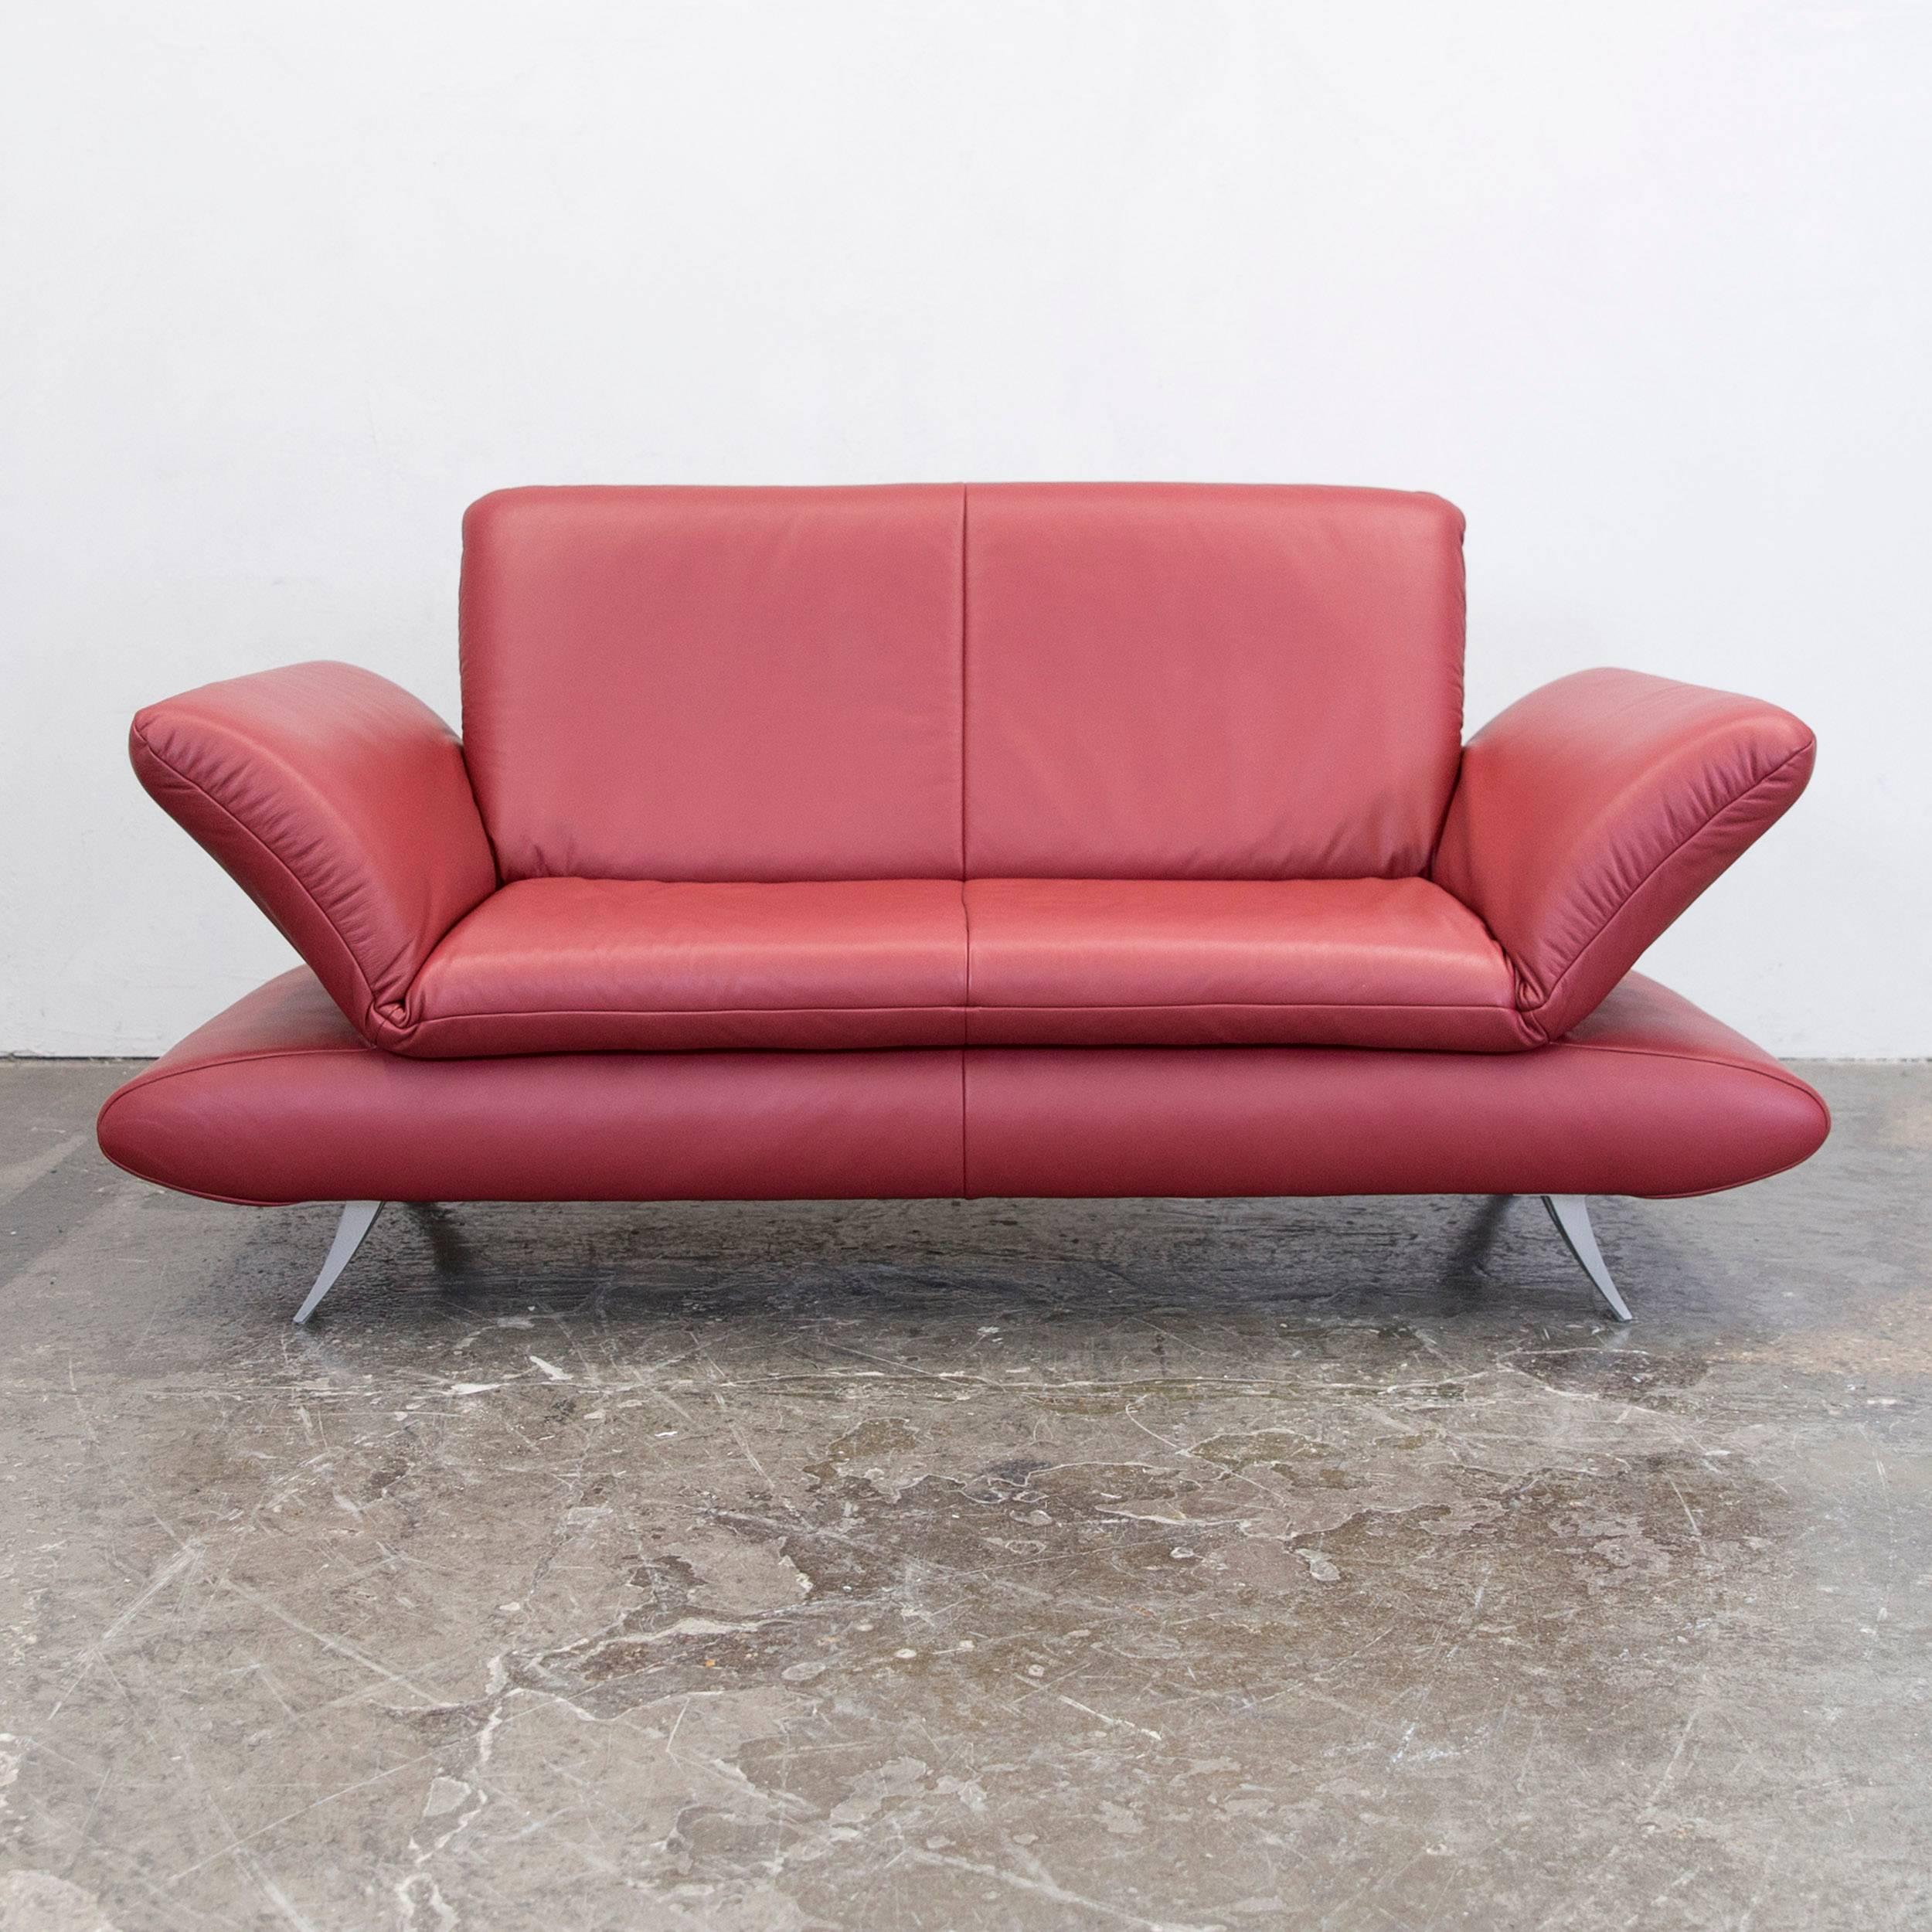 German Koinor Rossini Designer Sofa Red Full Leather Two-Seat Function Modern